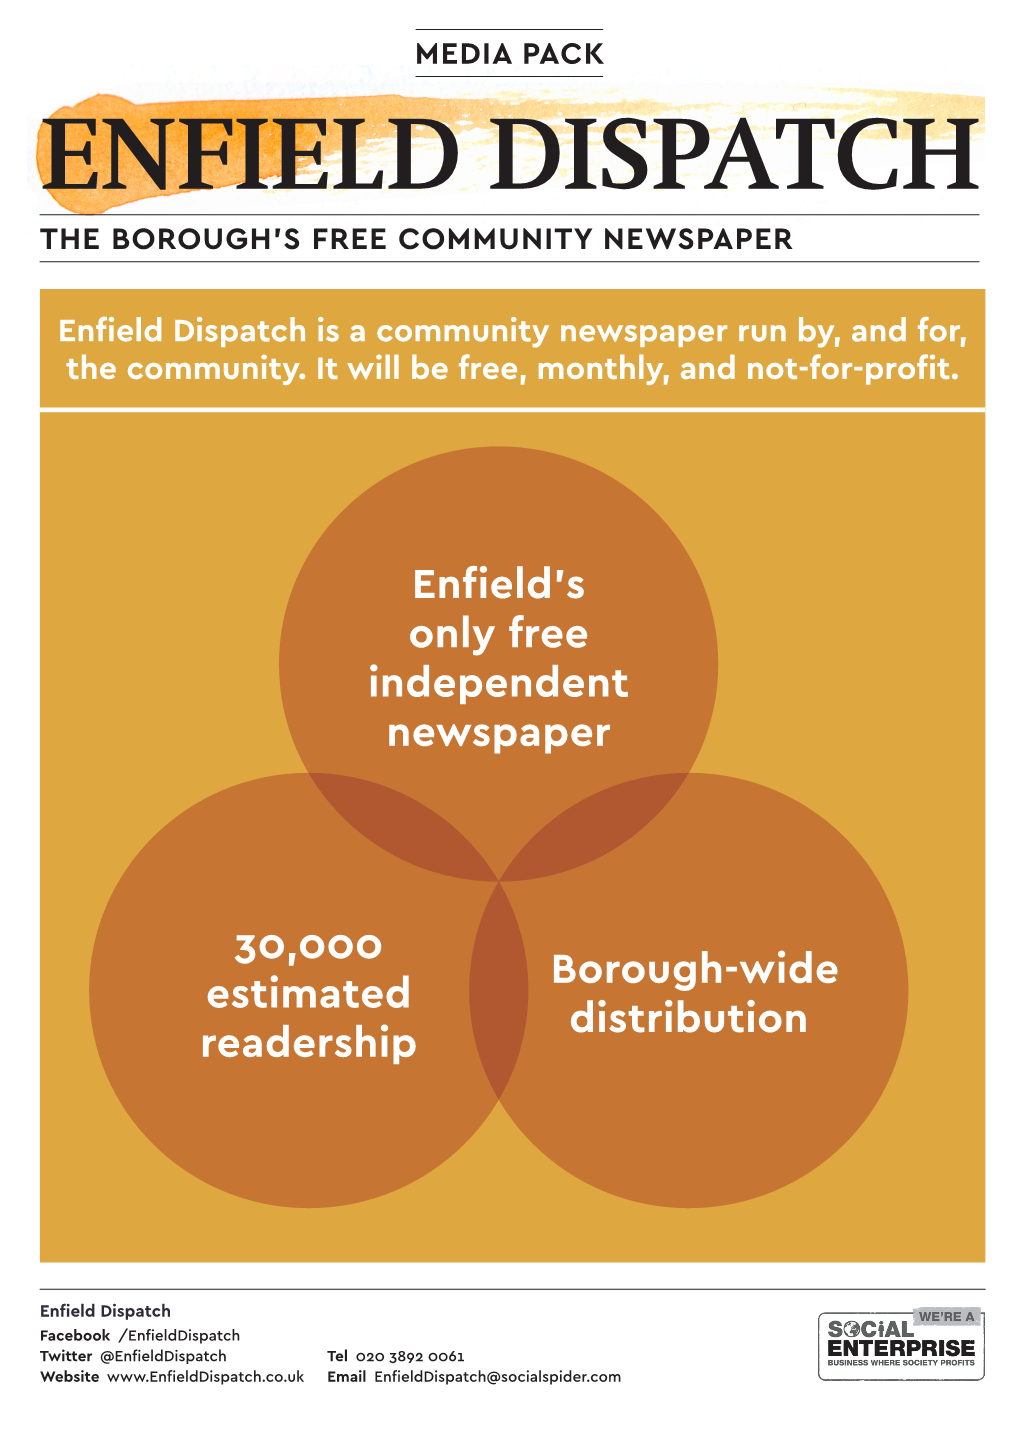 The Borough's Free Community